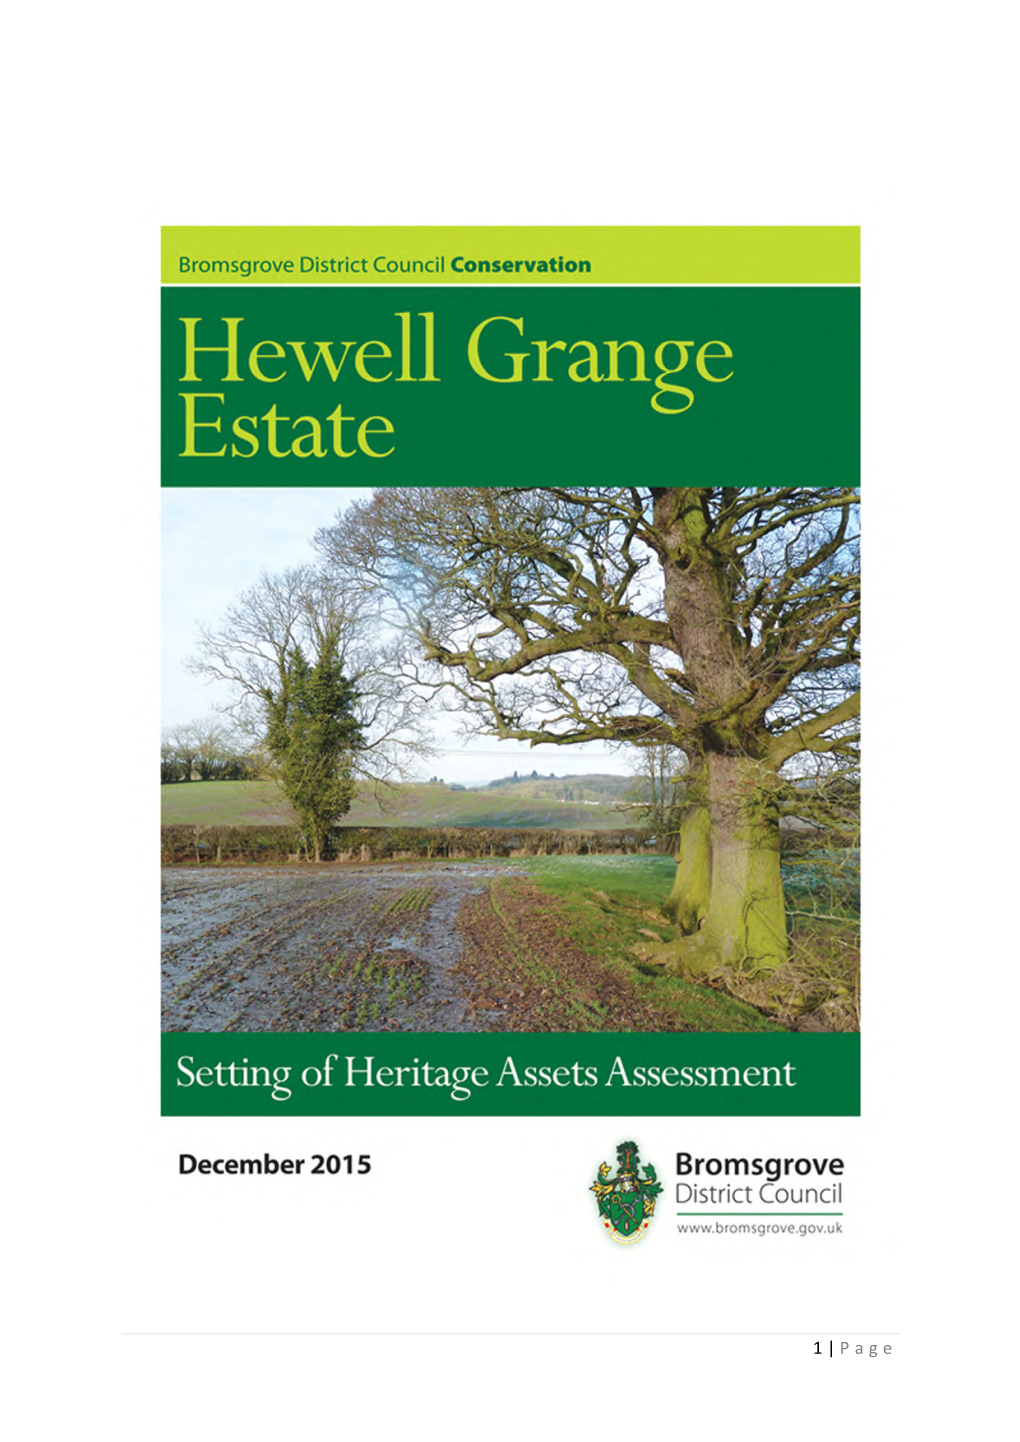 Hewell Grange Estate: Setting of Heritage Assets Assessment